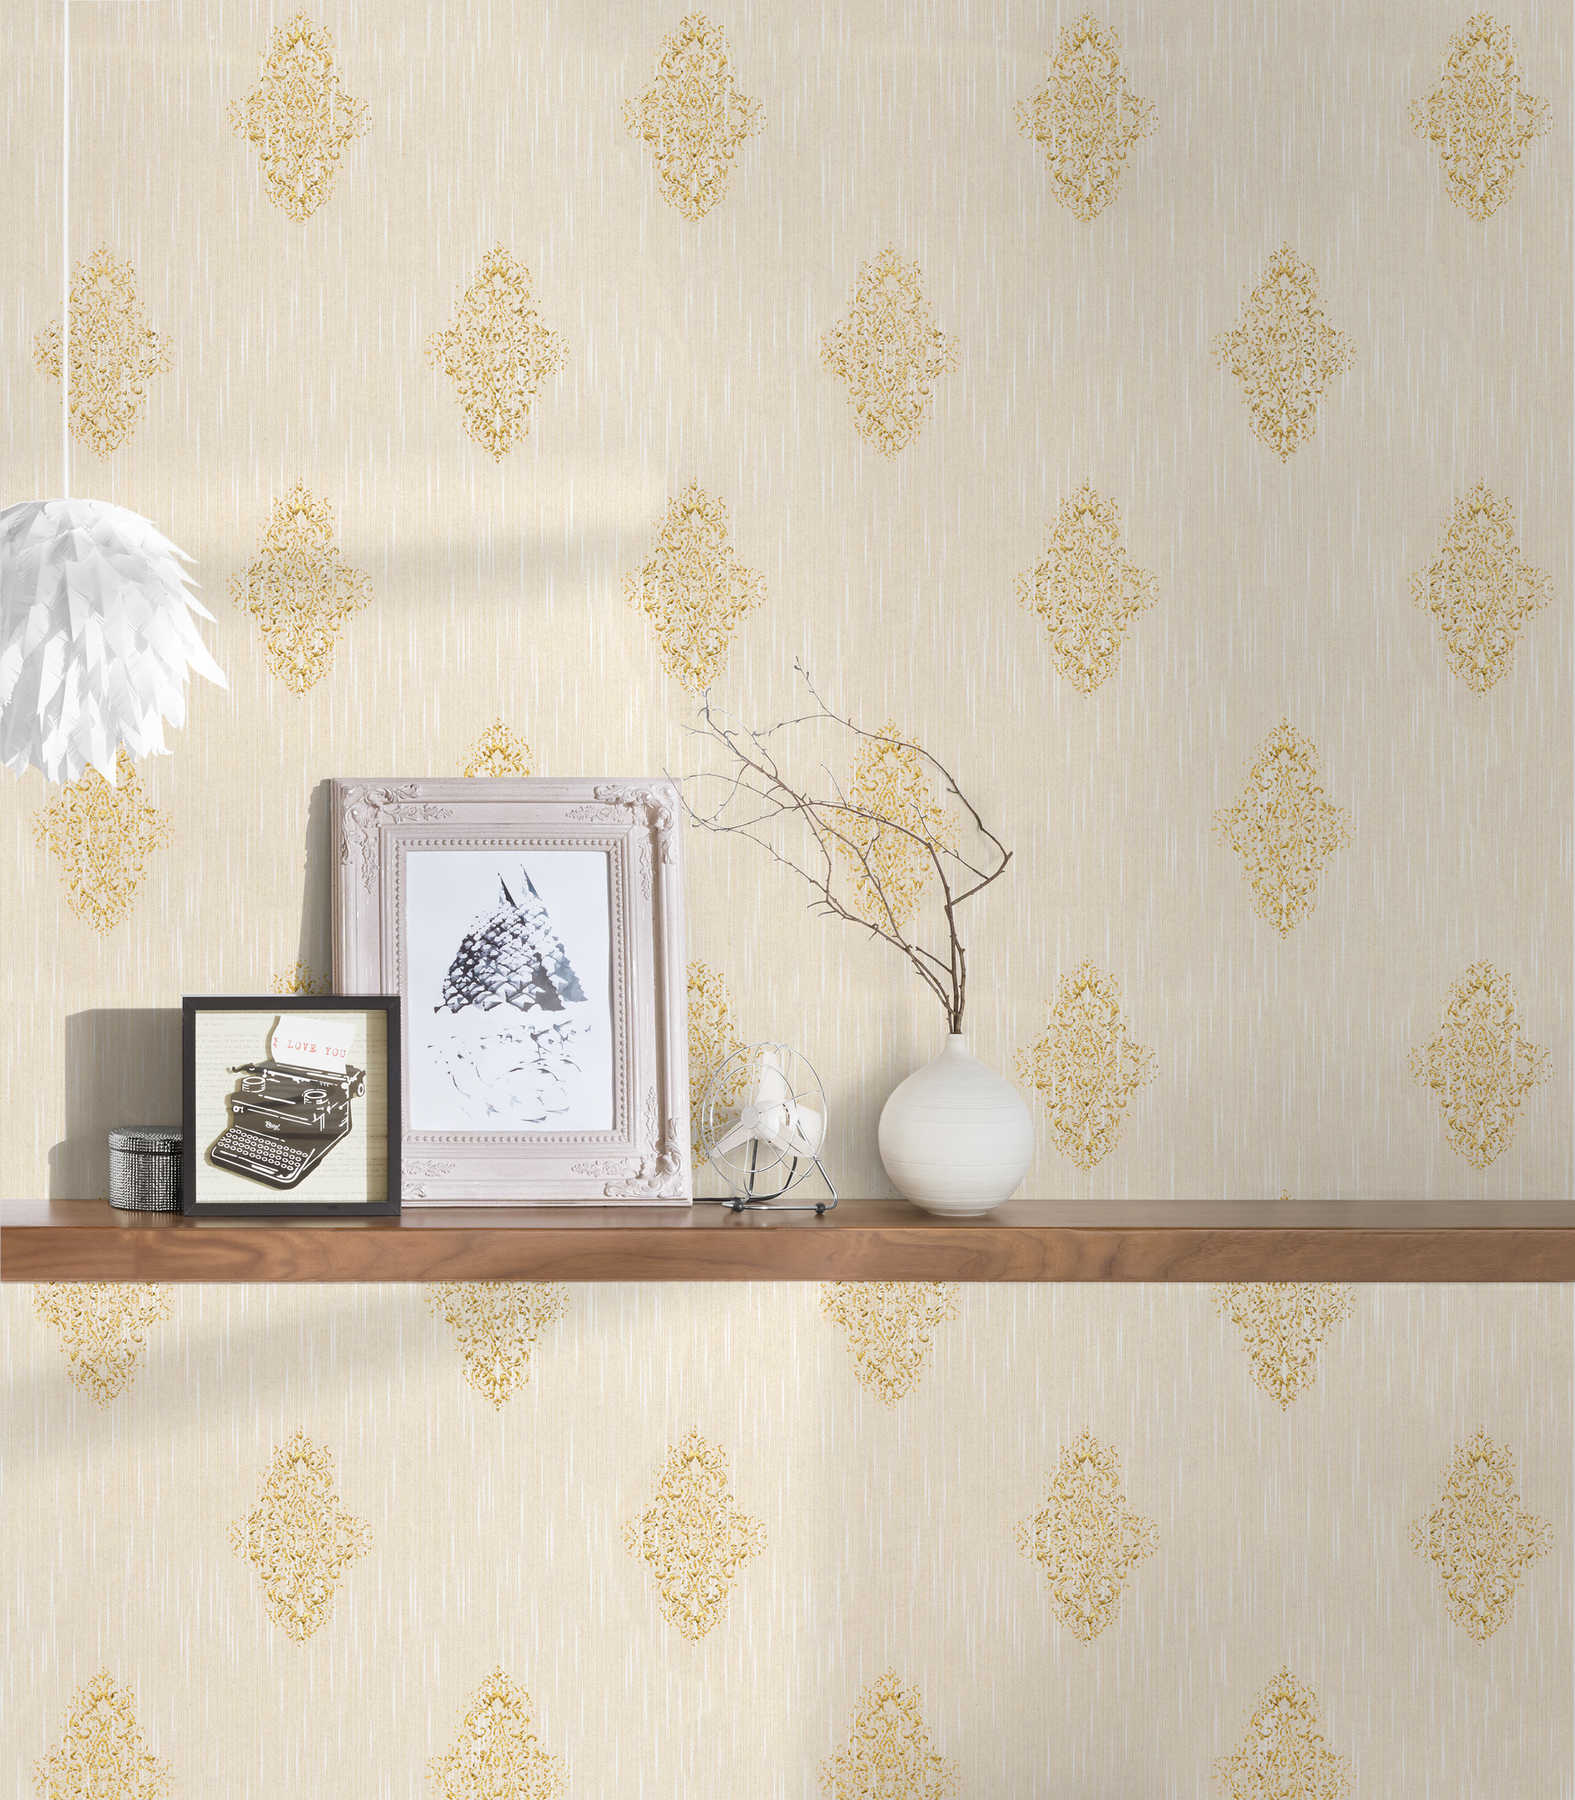             Tapete Ornament-Design im Used-Look, Metallic-Effekt – Creme, Gold
        